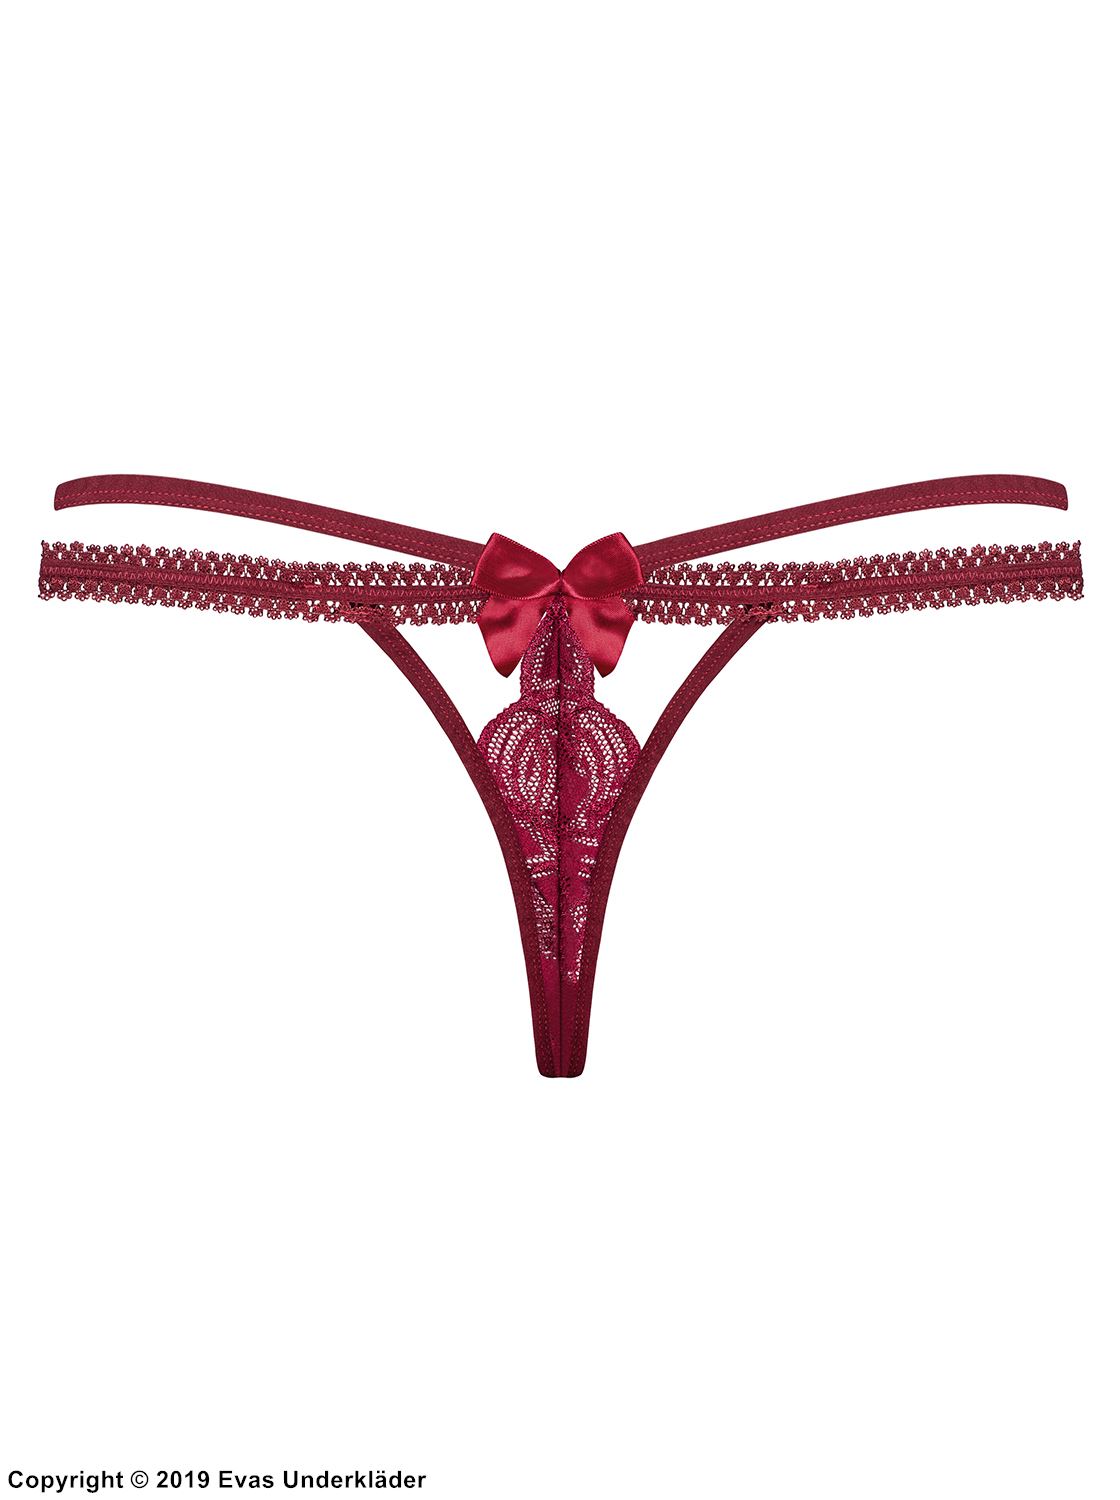 Minimal thong, lace, satin bow, thin straps